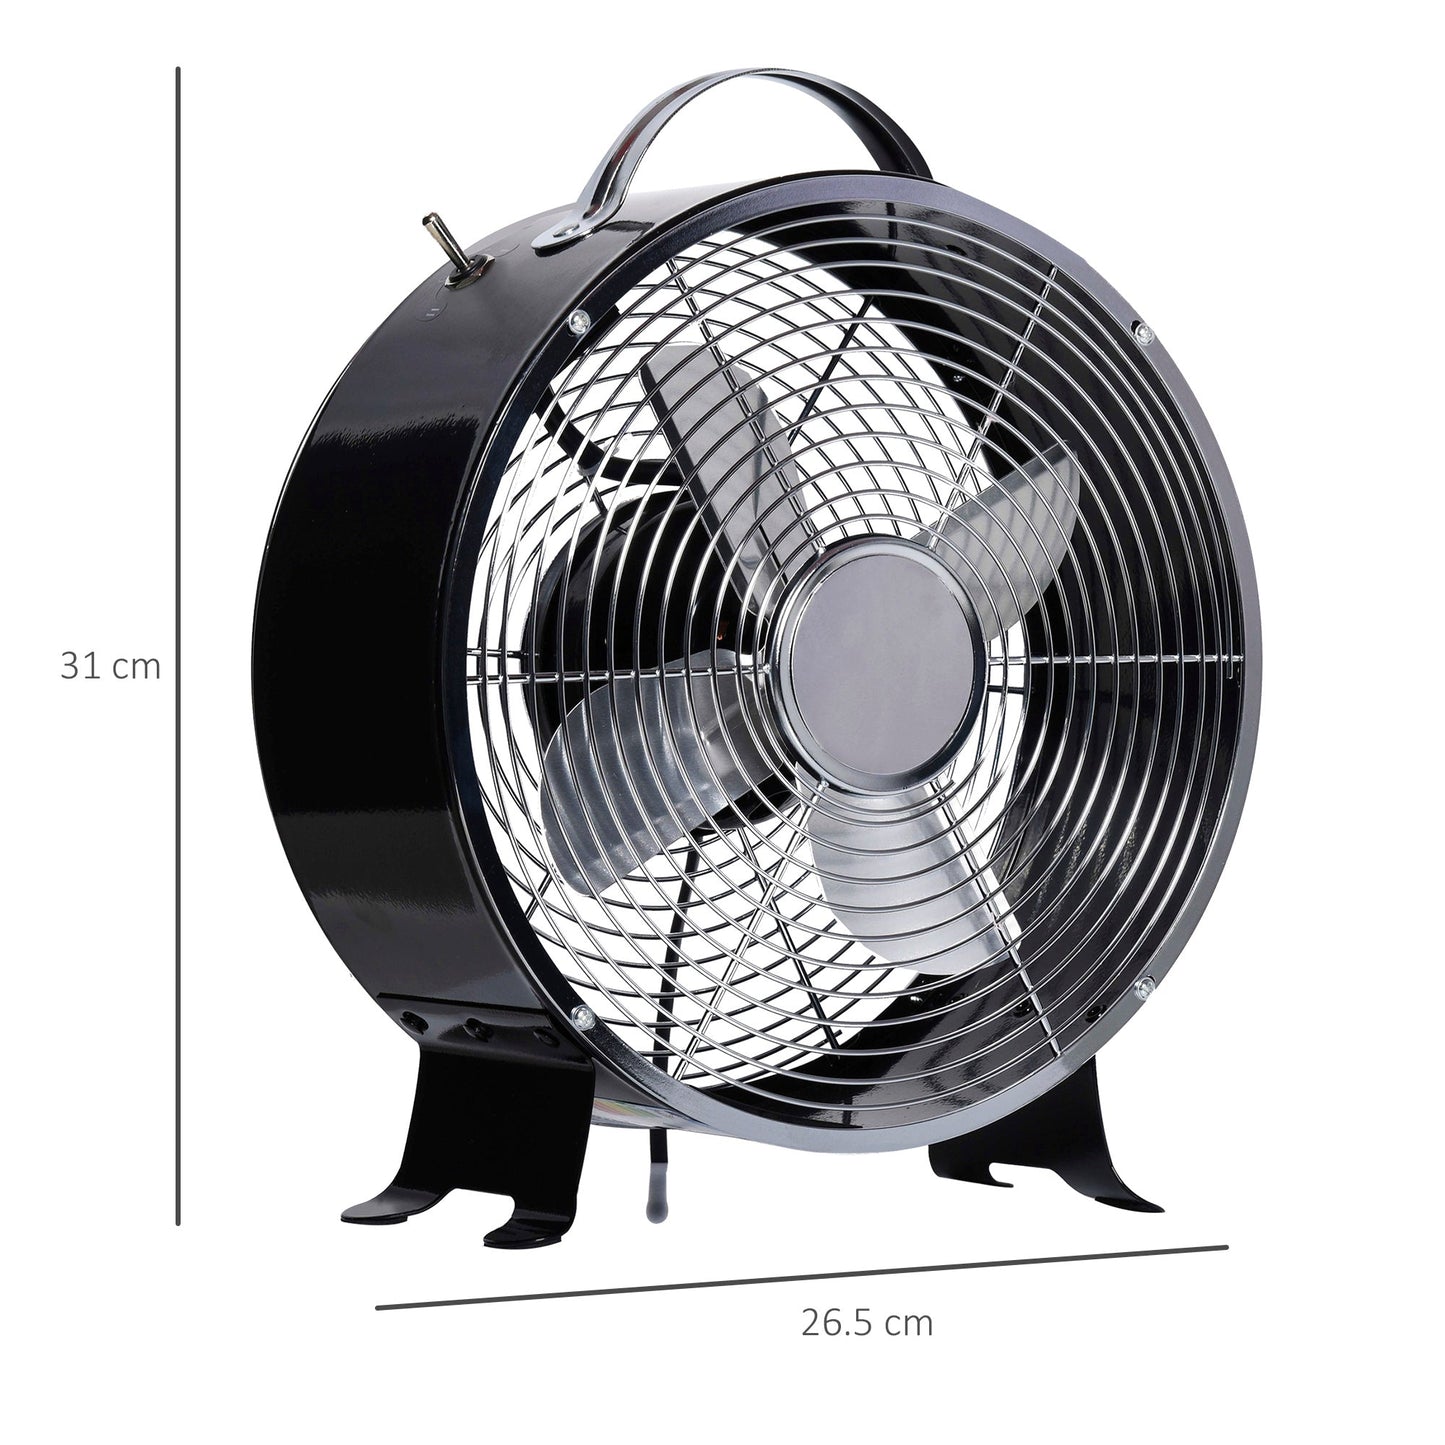 HOMCOM Personal Zephyr: Compact 26cm Desk Fan, 2 Speeds, Safety Guard, Anti-Slip Feet, Office or Home, Black